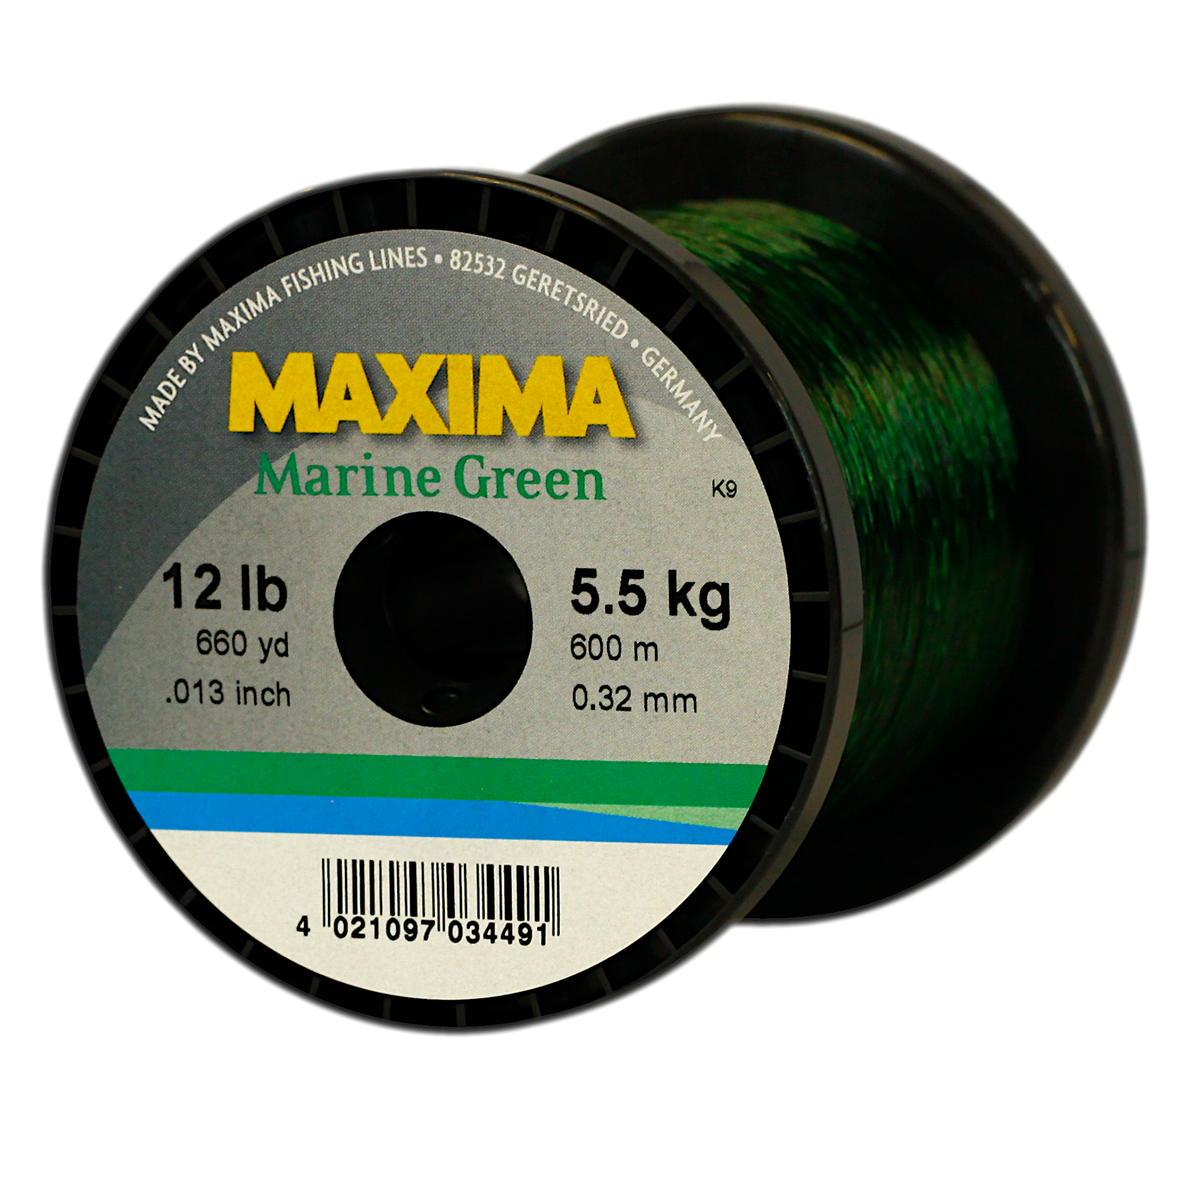 Maxima Nylon Fishing Line, 5.5KG/12LB 0.32MM, Colour Marine Green